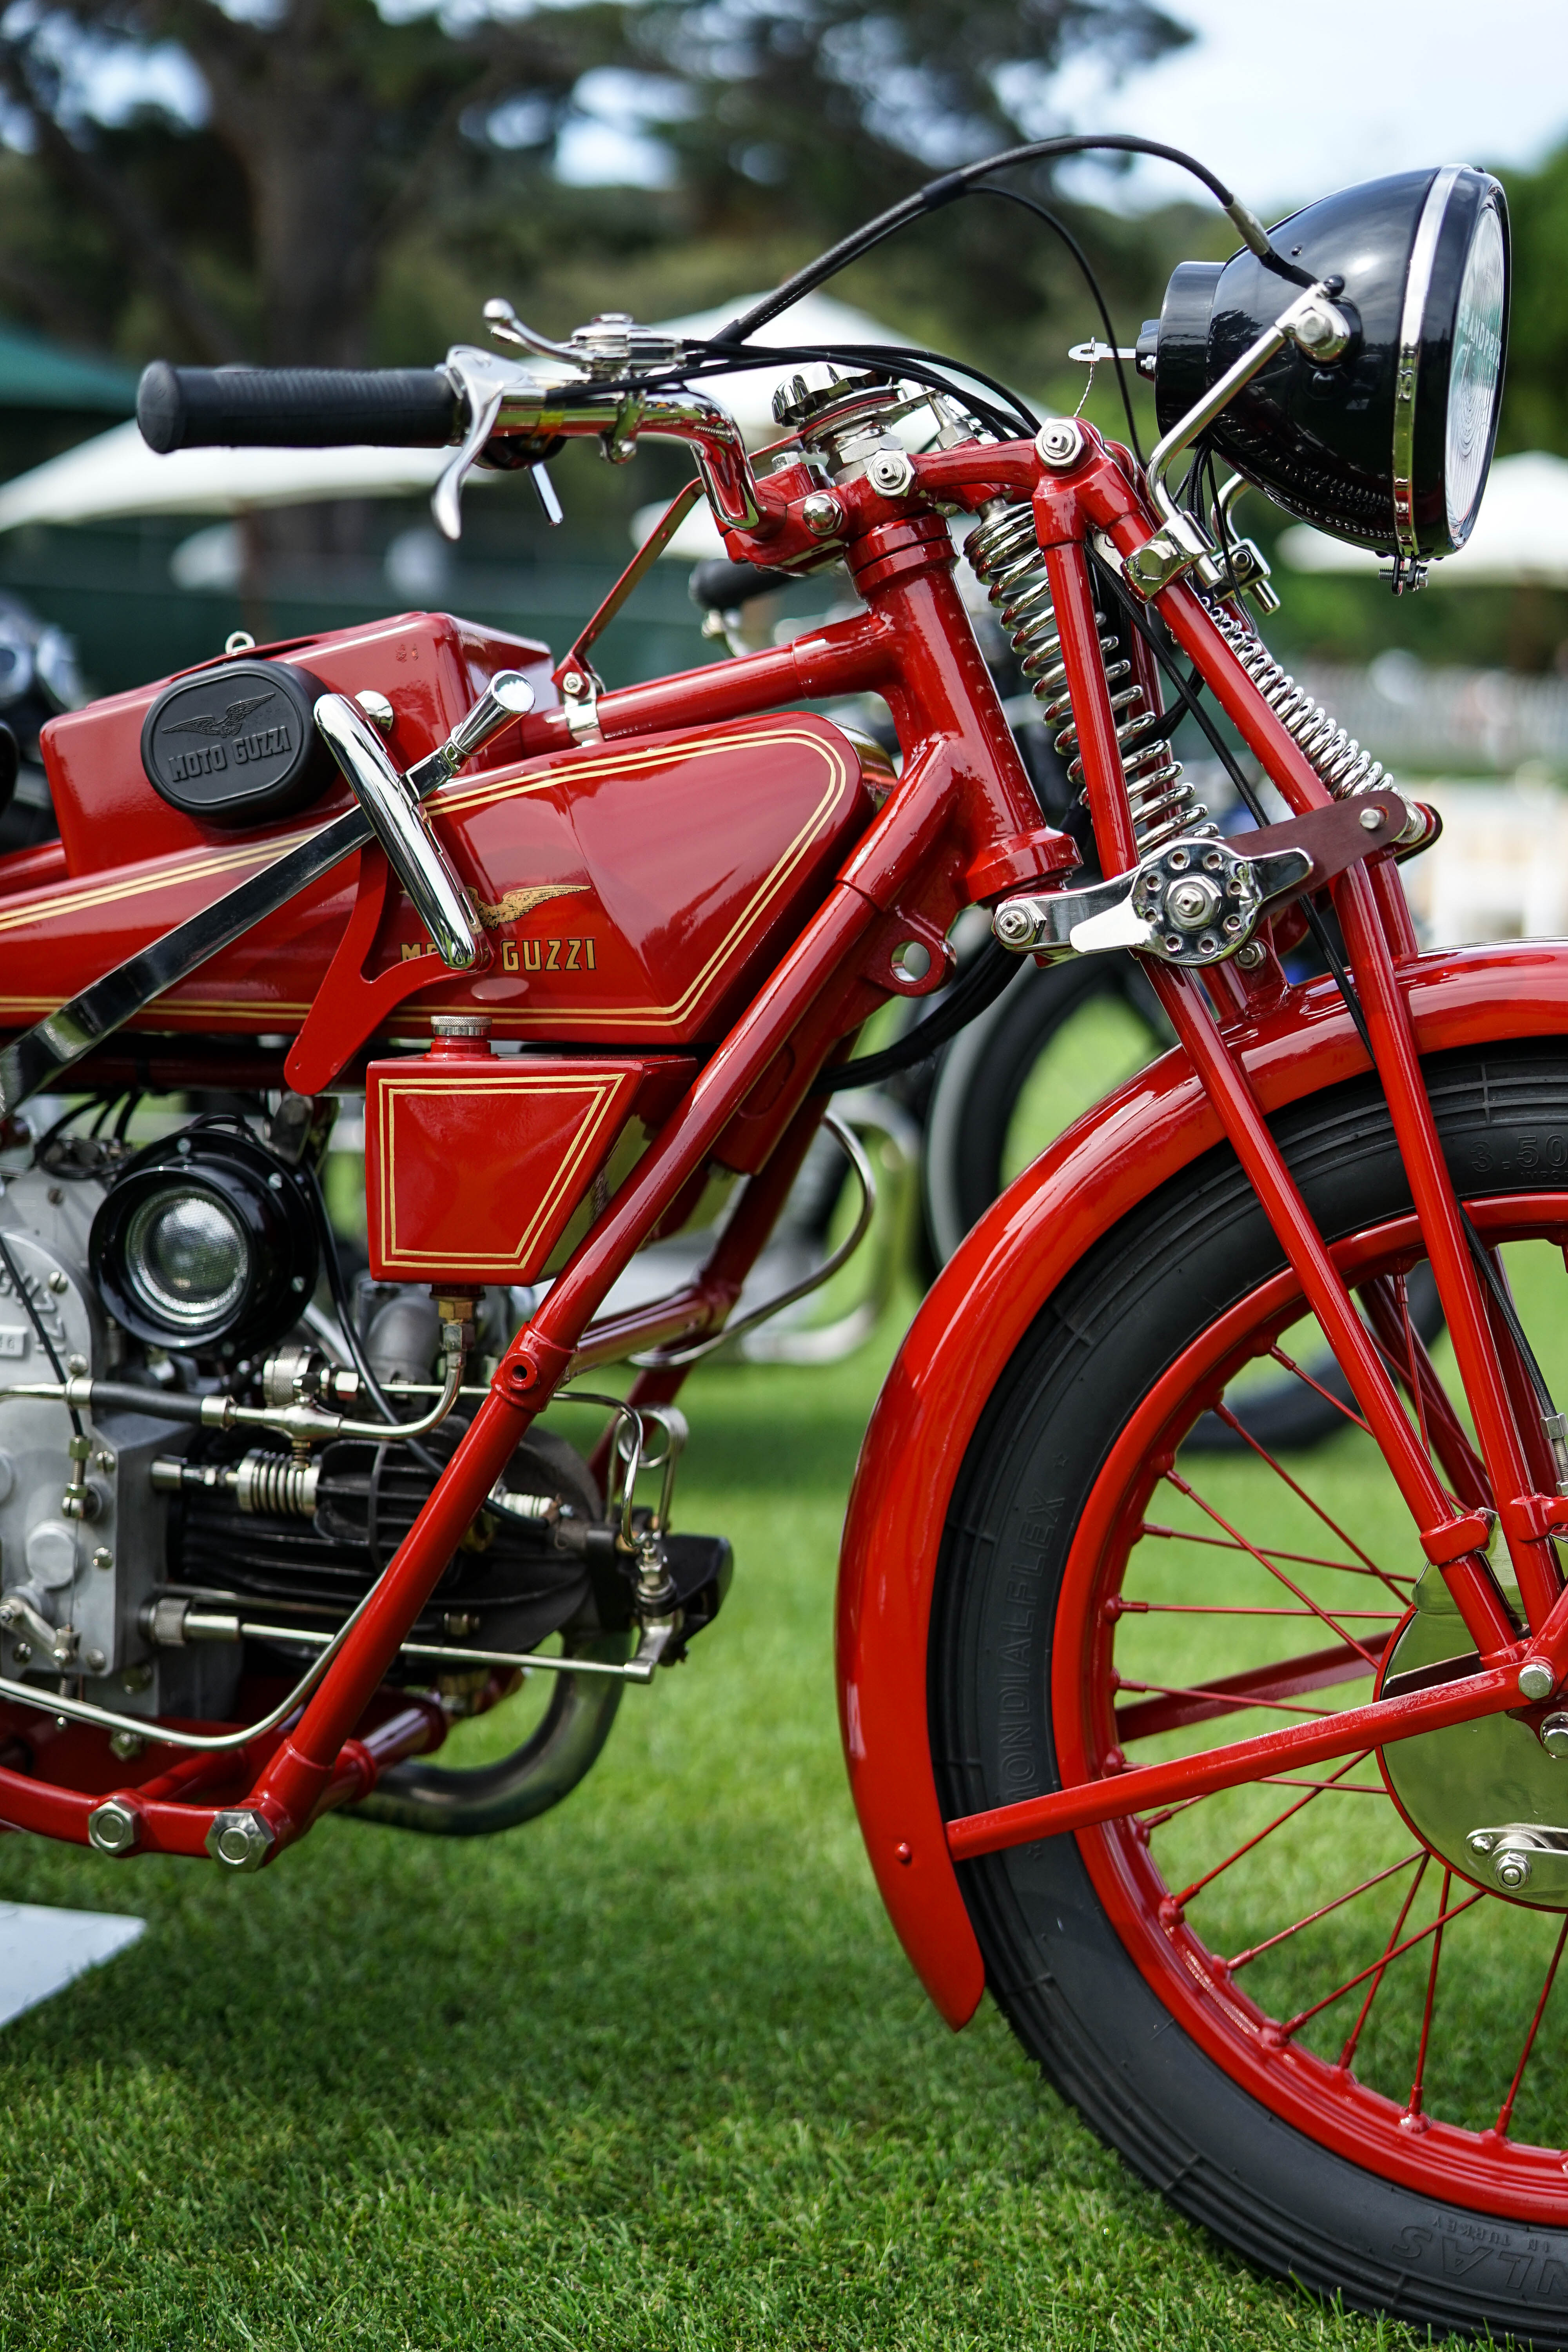 Vintage Moto Guzzi motorcycle